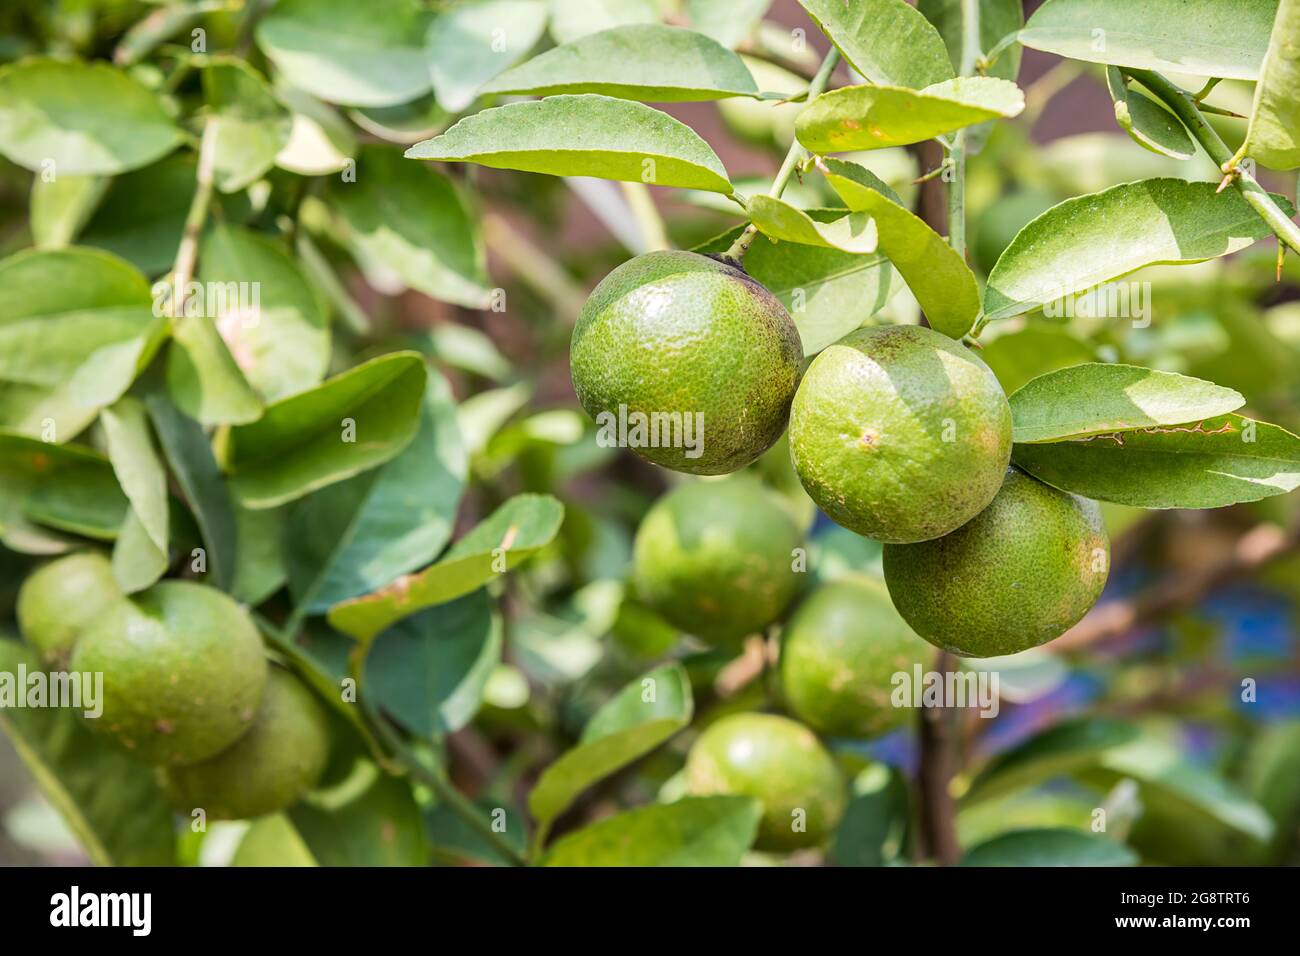 Green lemons on a branch in the garden. Stock Photo